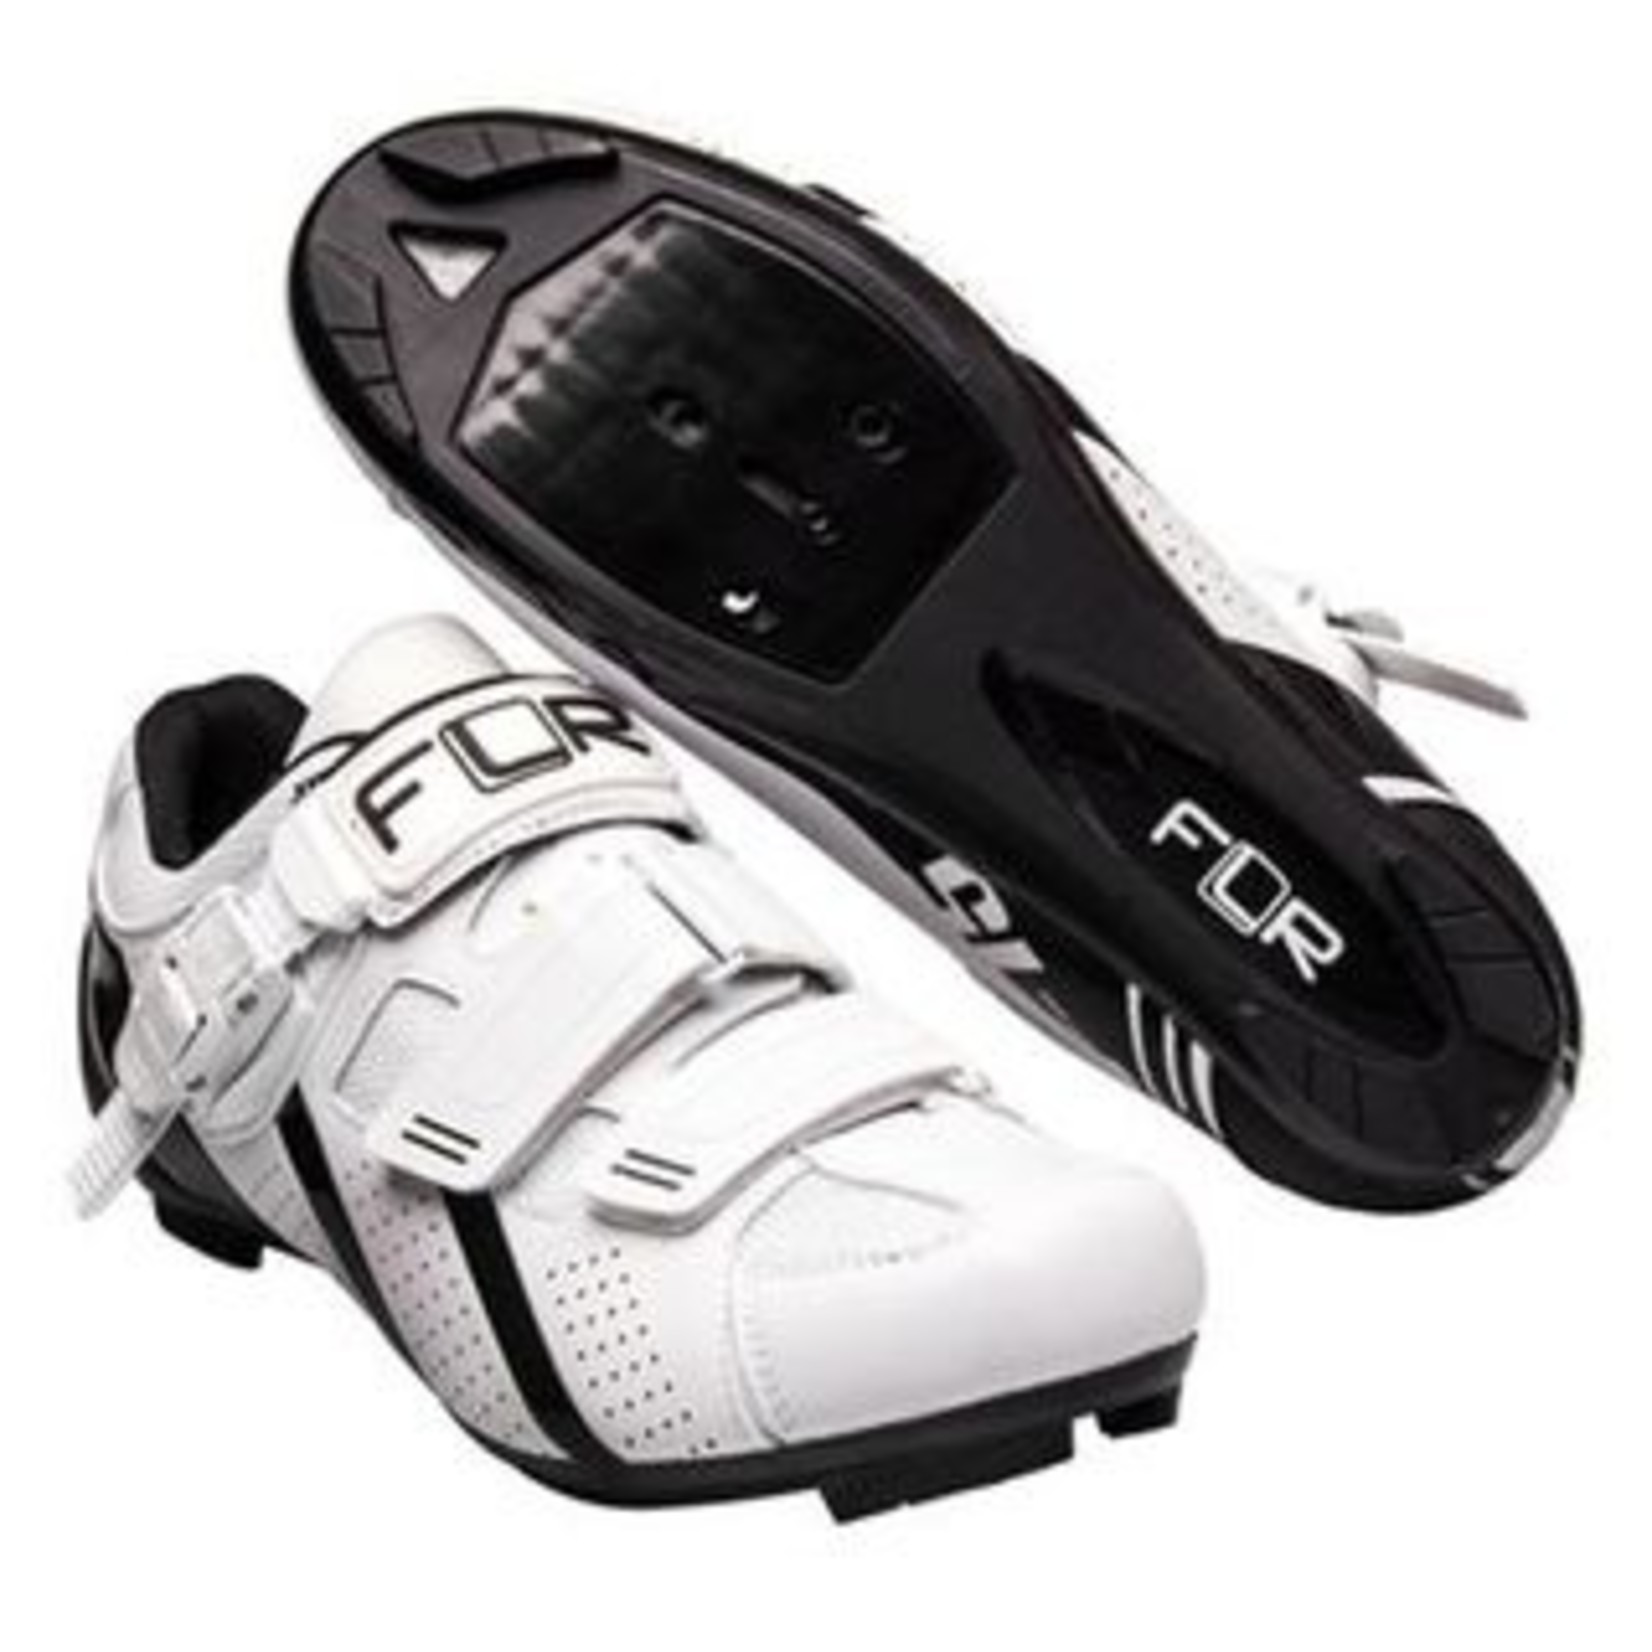 FLR FLR F-15-III - Pro Road Shoes - R250 Outsole - Clip & Laces - Size 44 - White